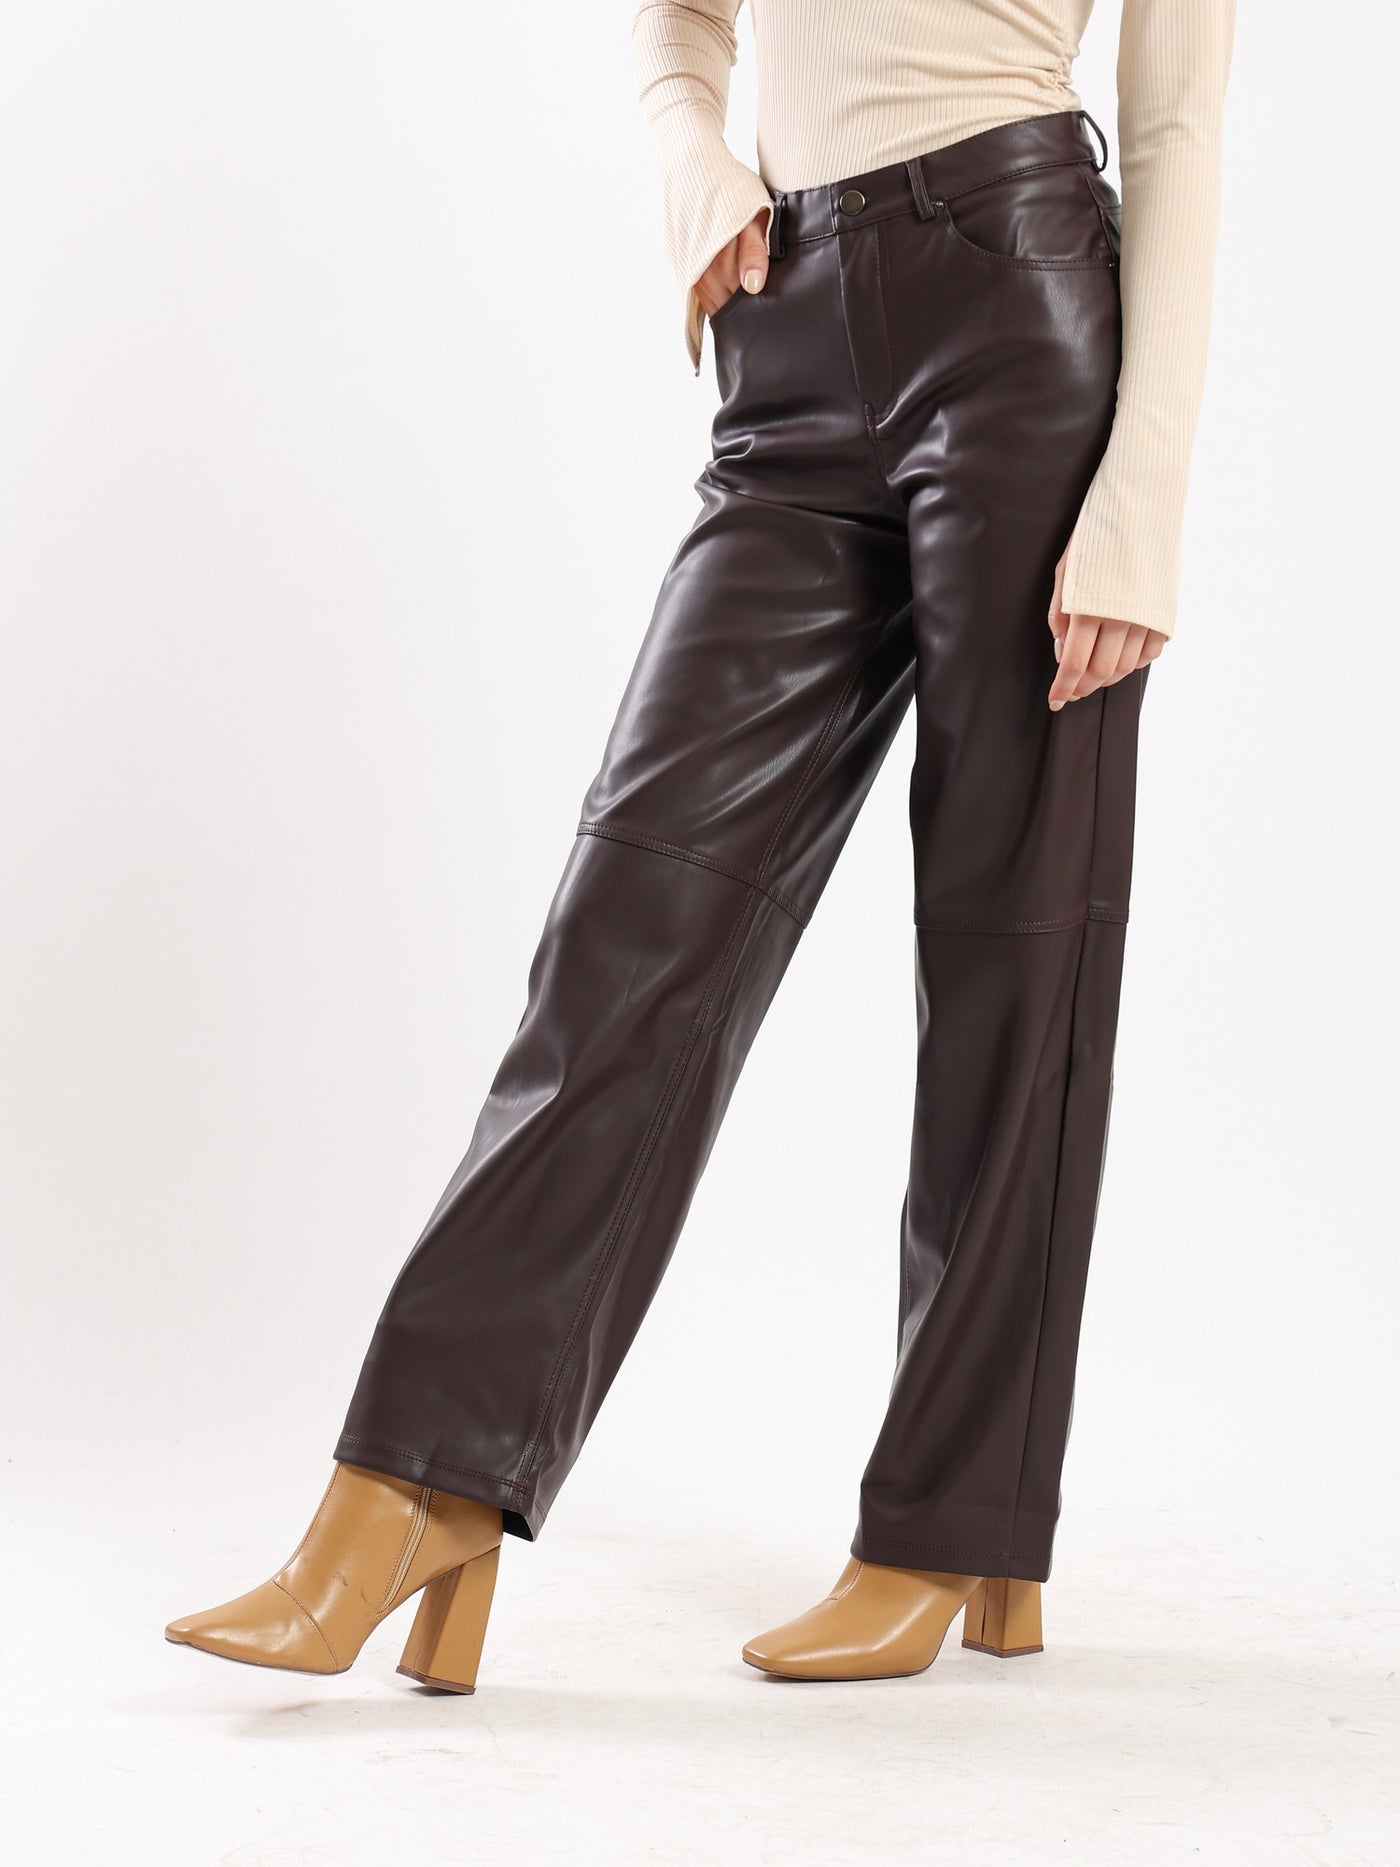 Leather Pants - Straight Legs